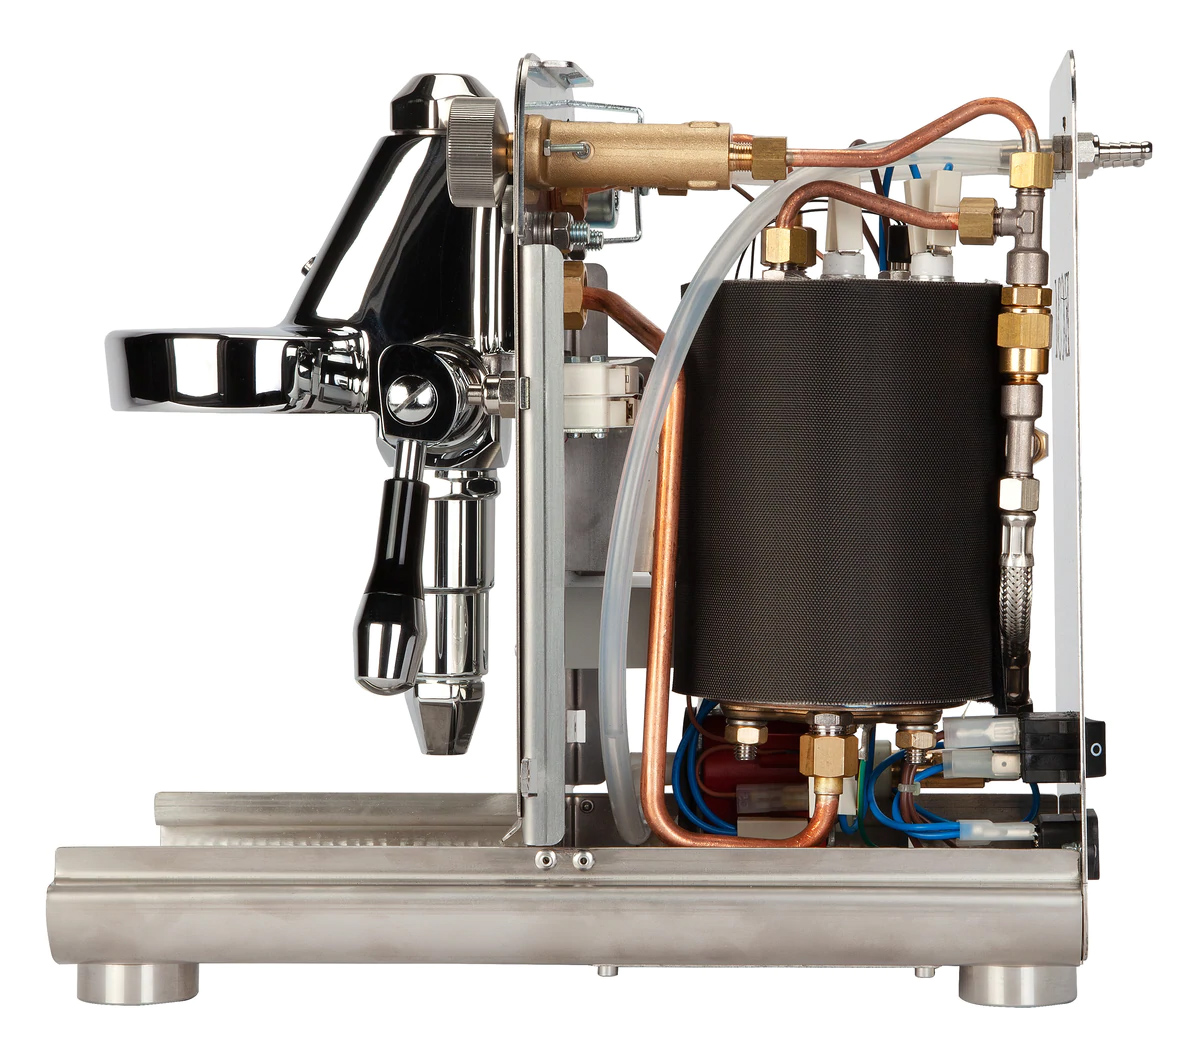 ECM - Puristika Stainless steel & Anthracite Semiautomatic Espresso Machine 110V - 81025US 